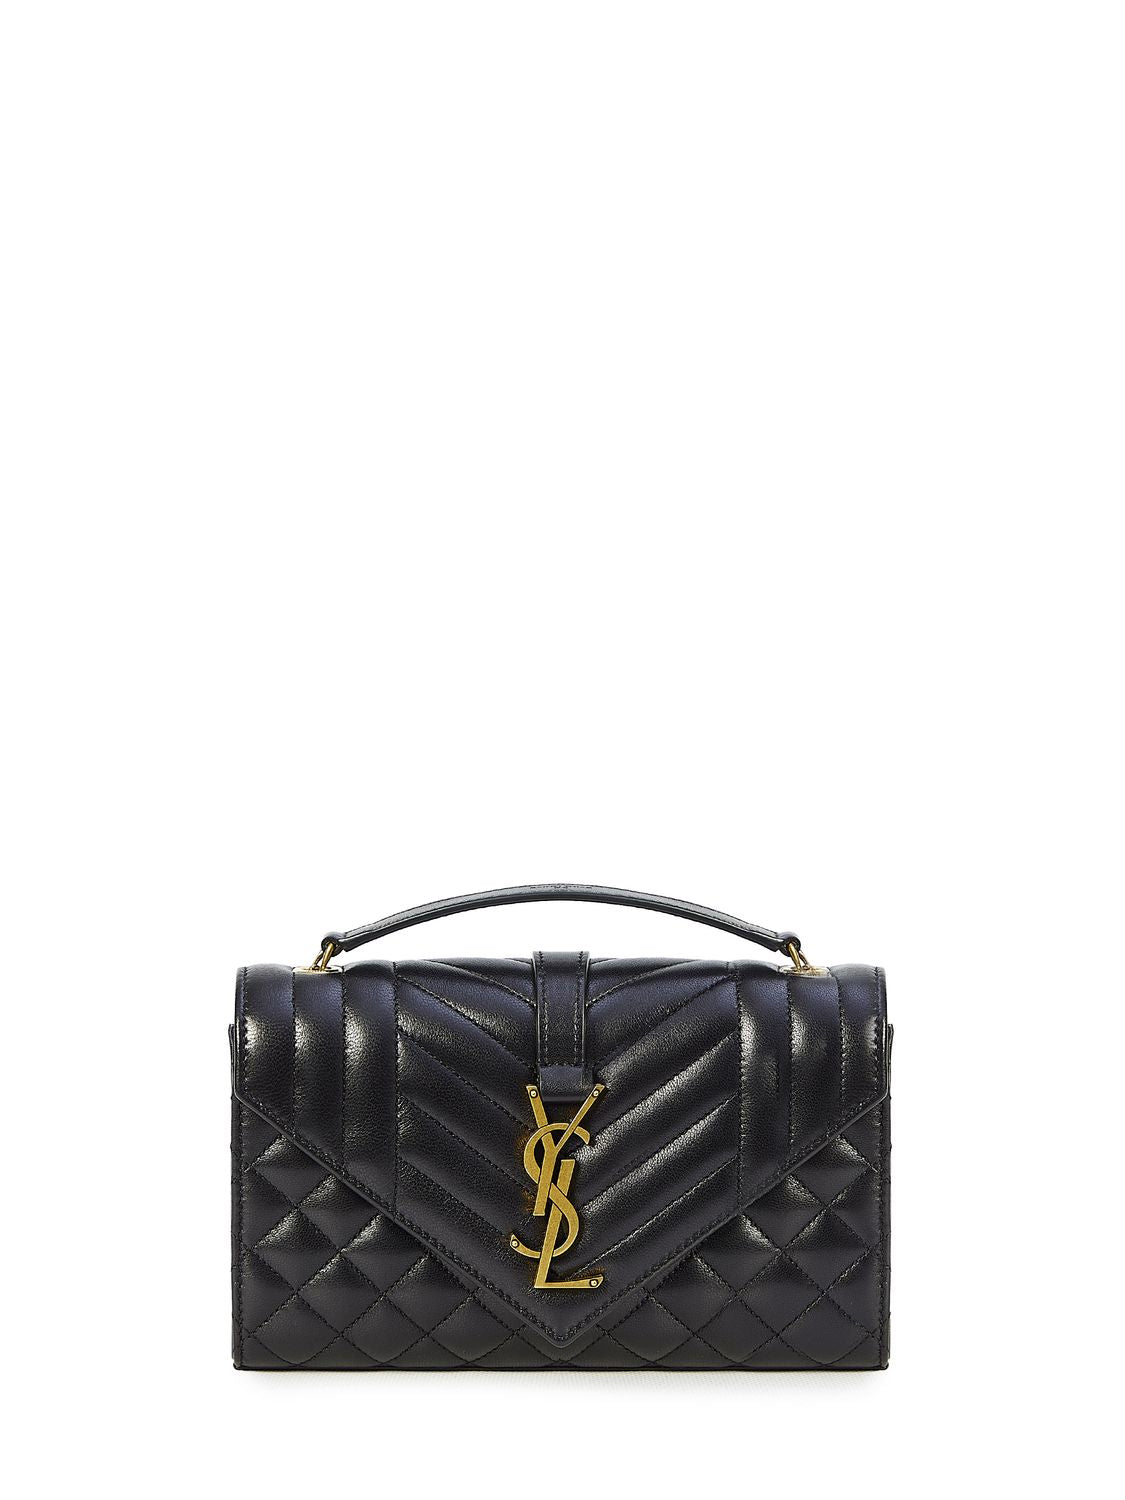 SAINT LAURENT Black Mini Envelope Handbag in Quilted Lambskin with Bronze YSL Monogram, 21x13x5.5 cm